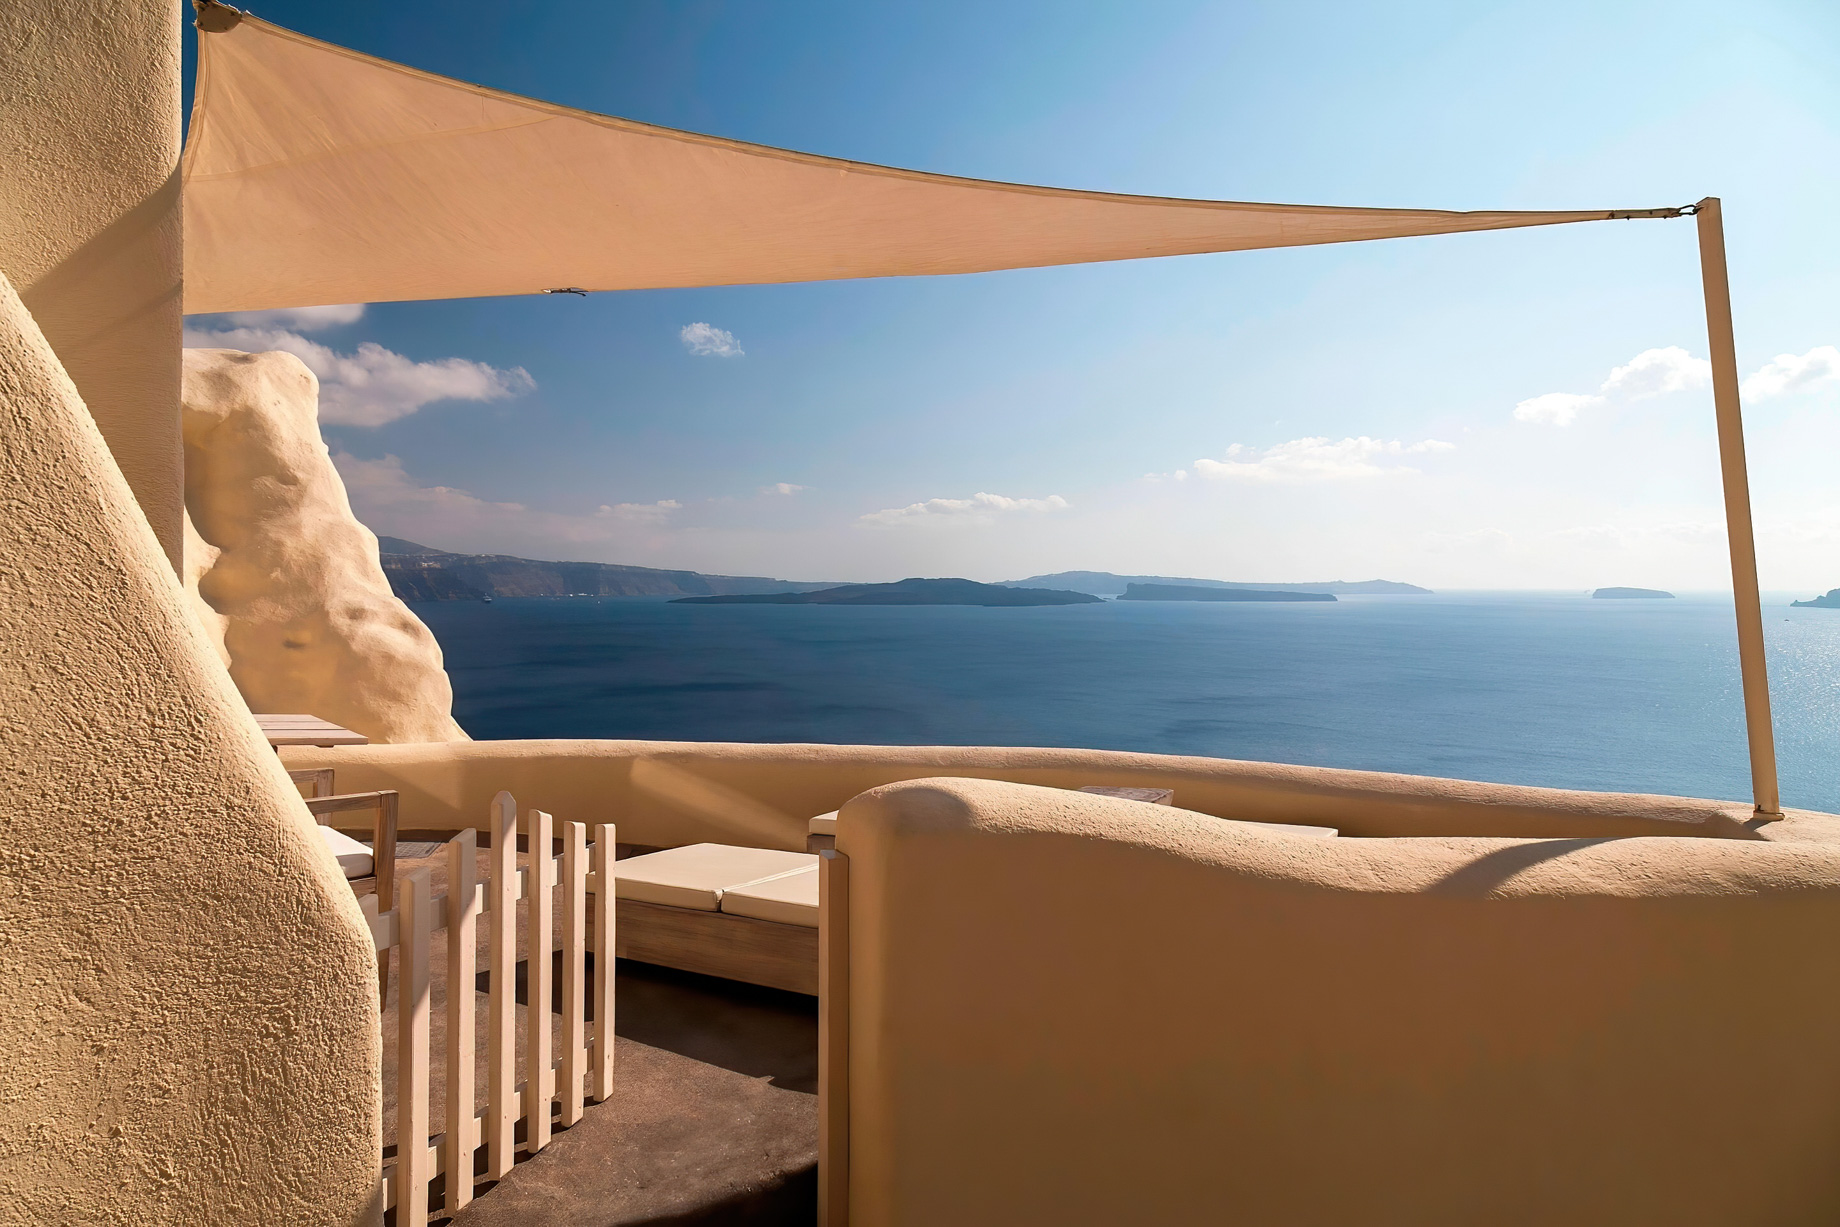 Mystique Hotel Santorini – Oia, Santorini Island, Greece – Panoramic Sea View Deck